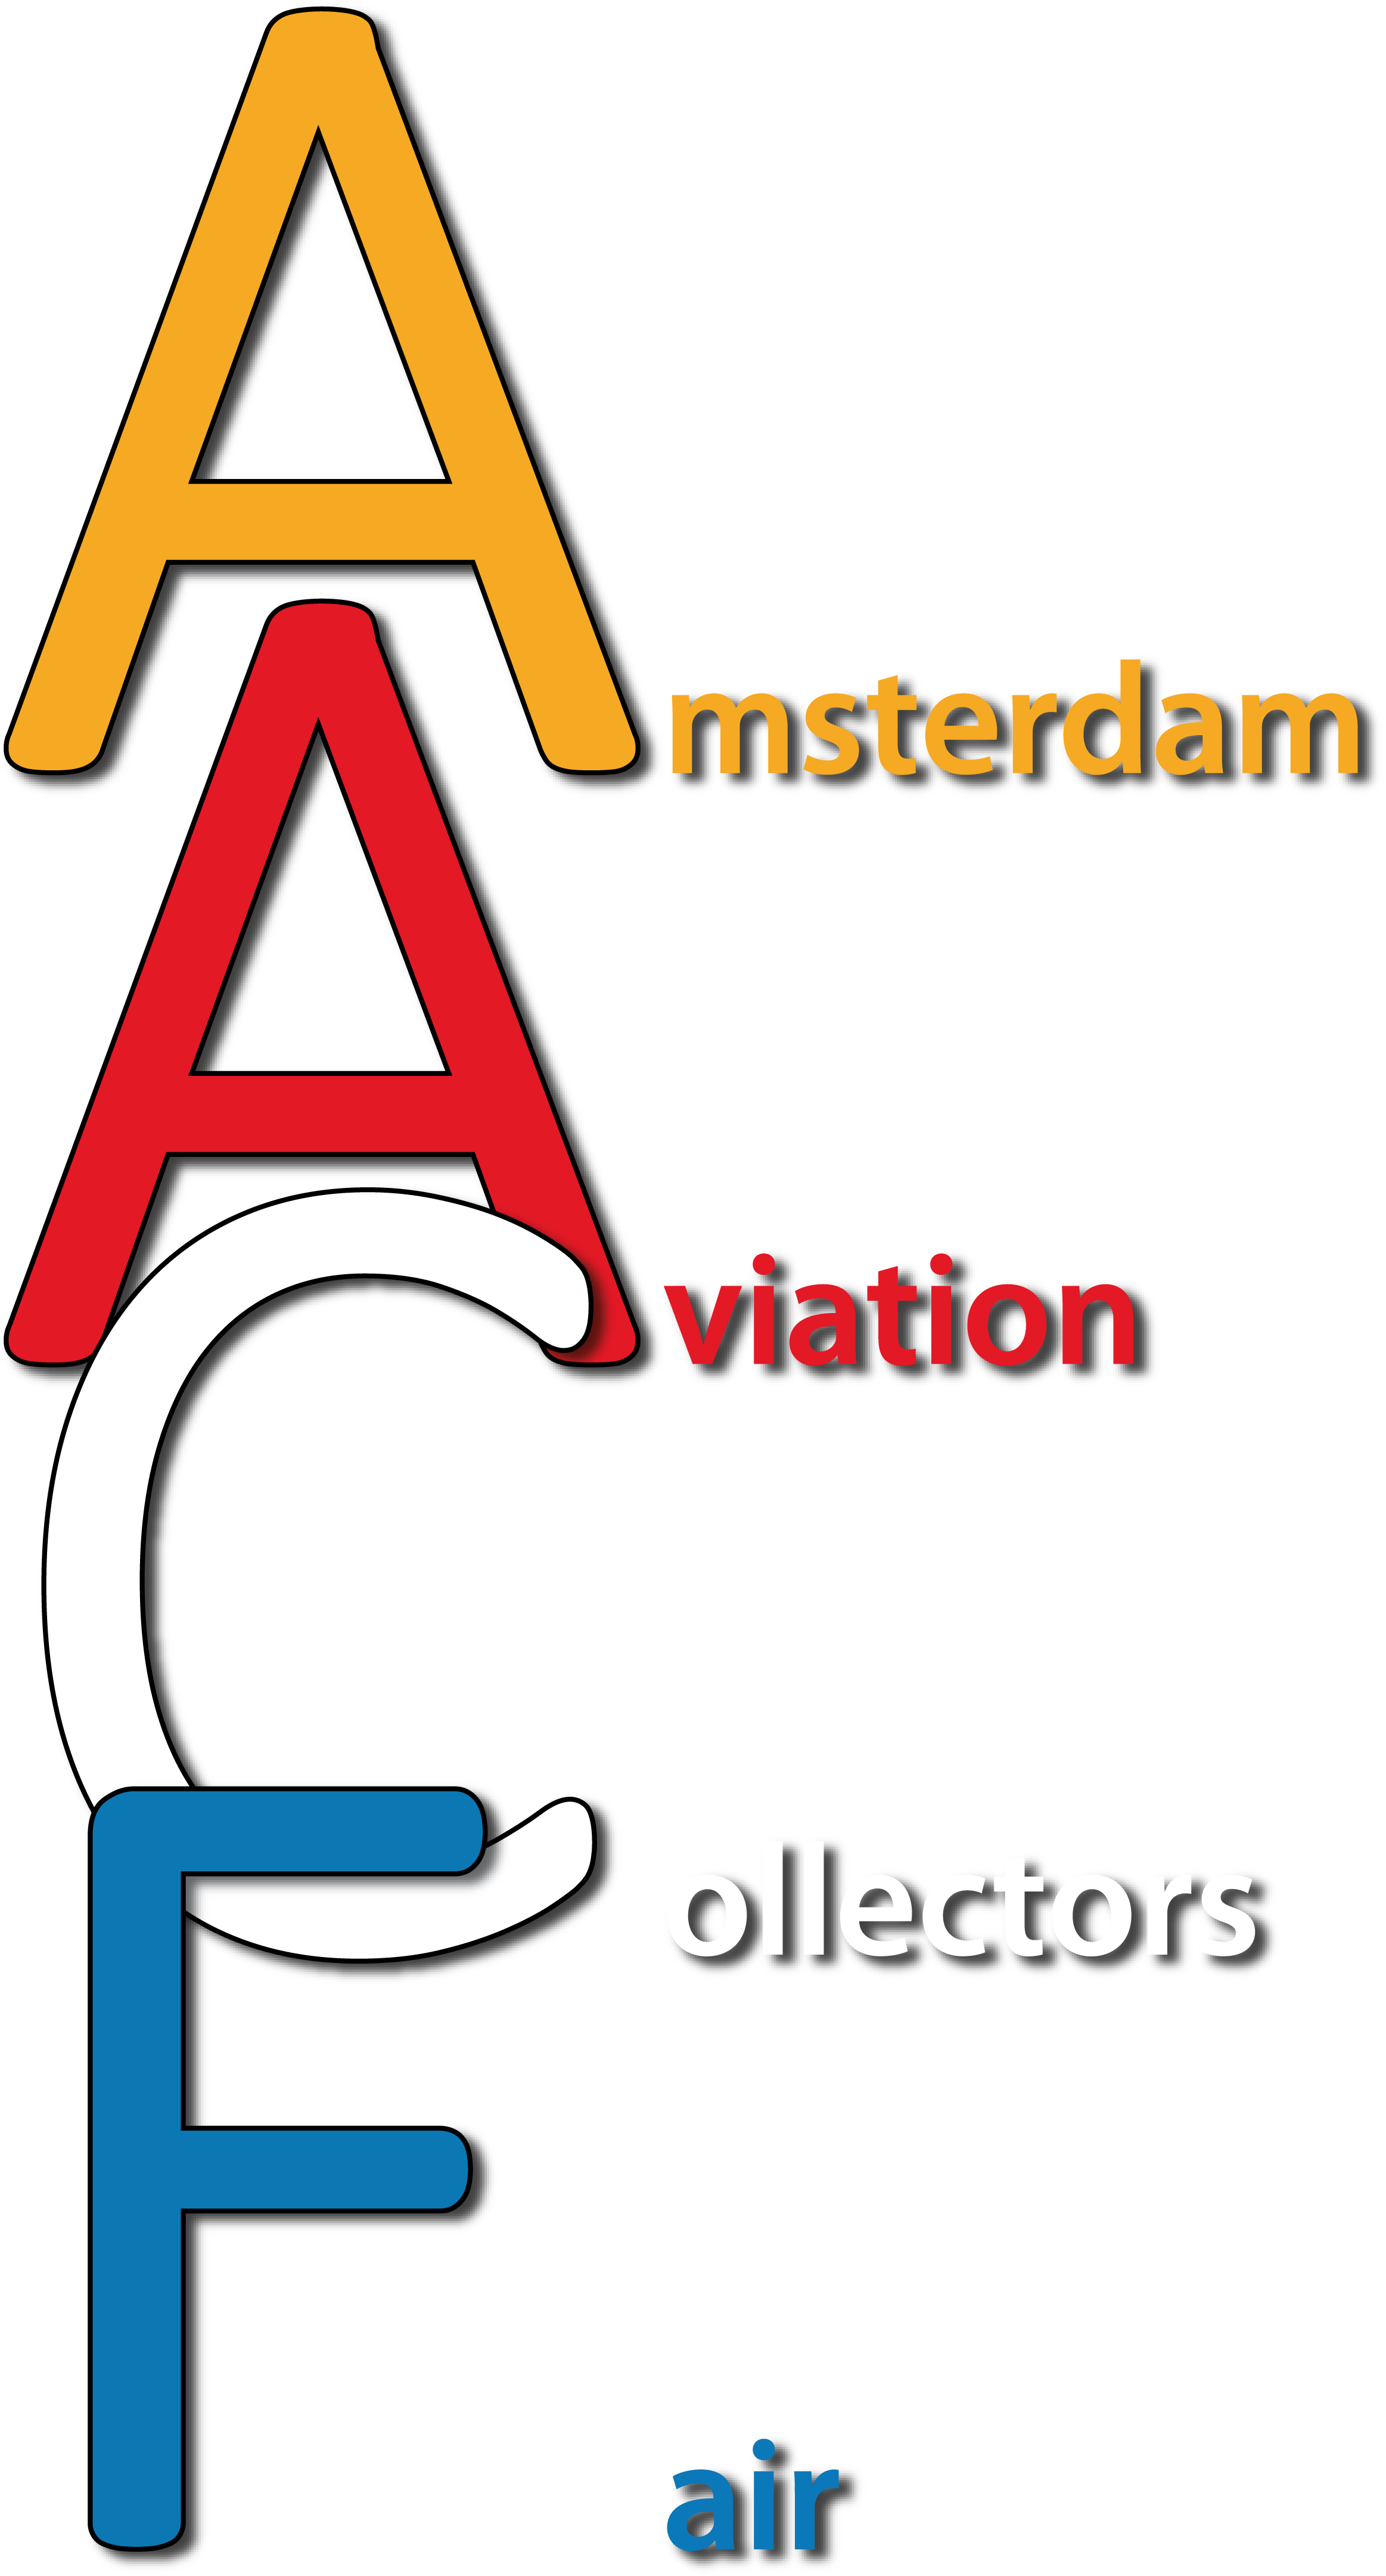 Logo Amsterdam Aviation Collectors Fair presented by Aviation Collectors Association